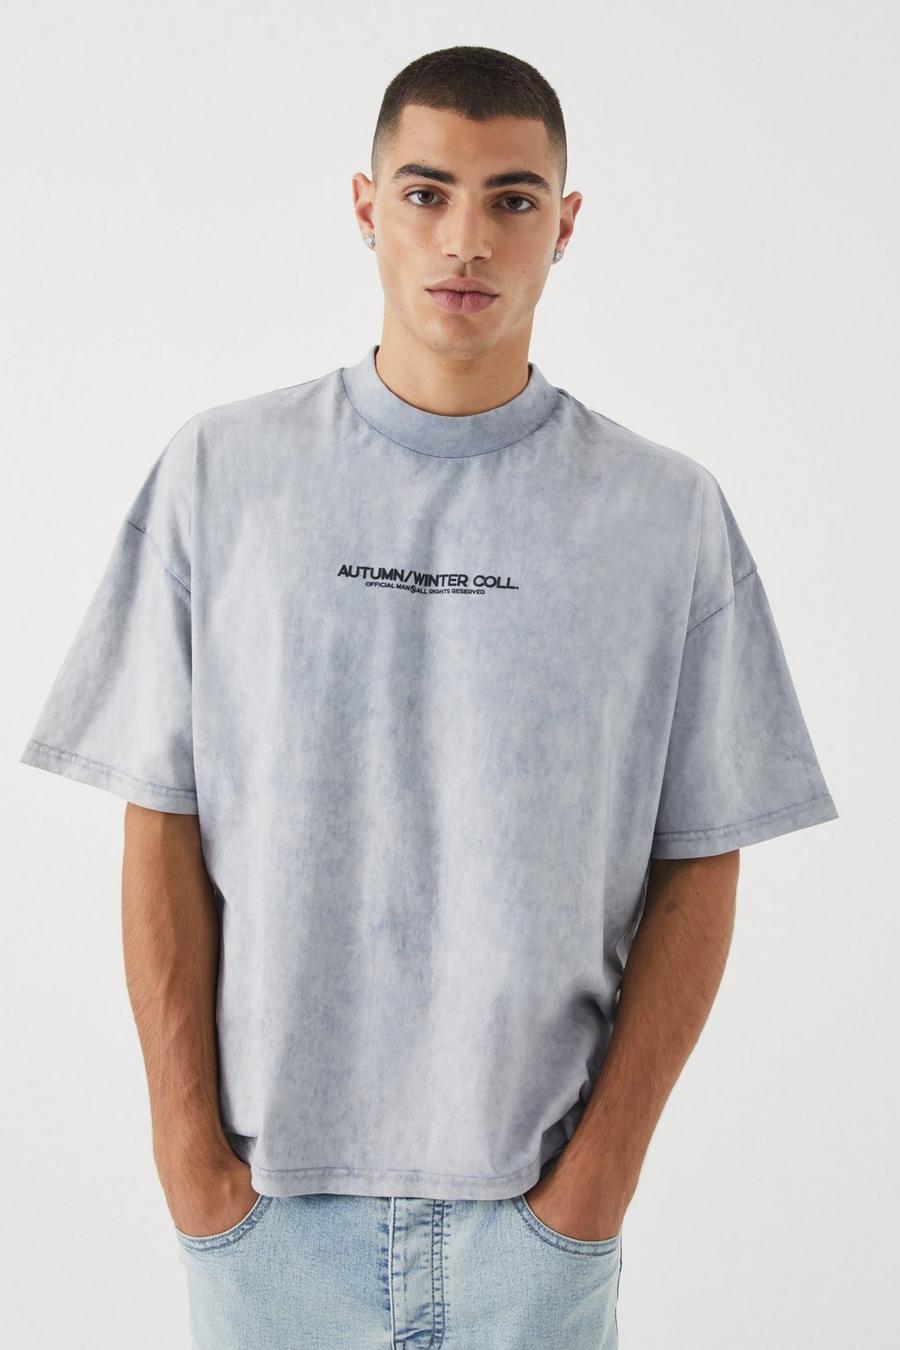 Kastiges Oversize Batik T-Shirt mit Marmor-Print, Light grey grau